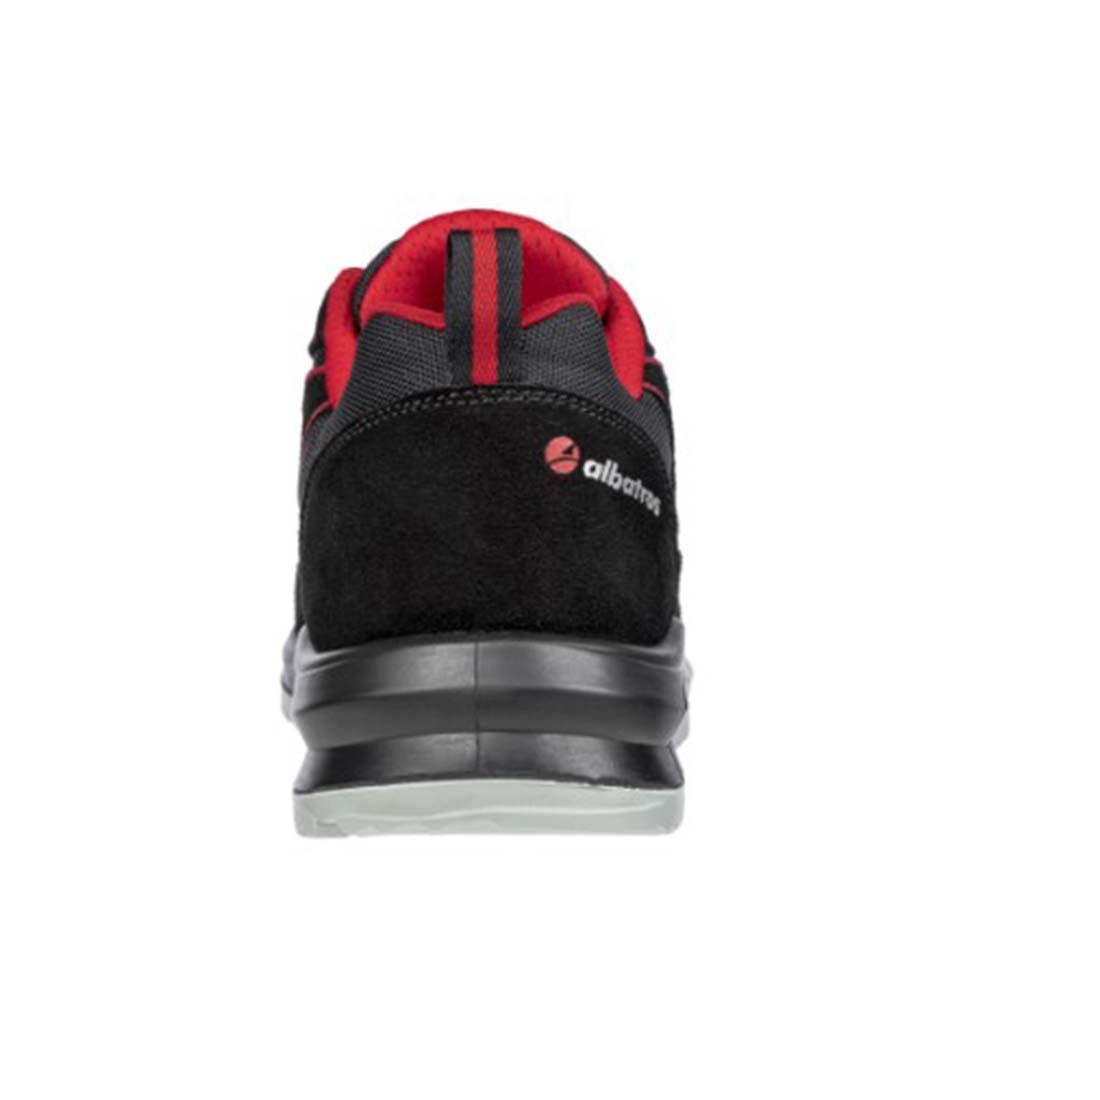 Pantofi de protectie S1P CLIFTON O2 - Incaltaminte de protectie | Bocanci, Pantofi, Sandale, Cizme